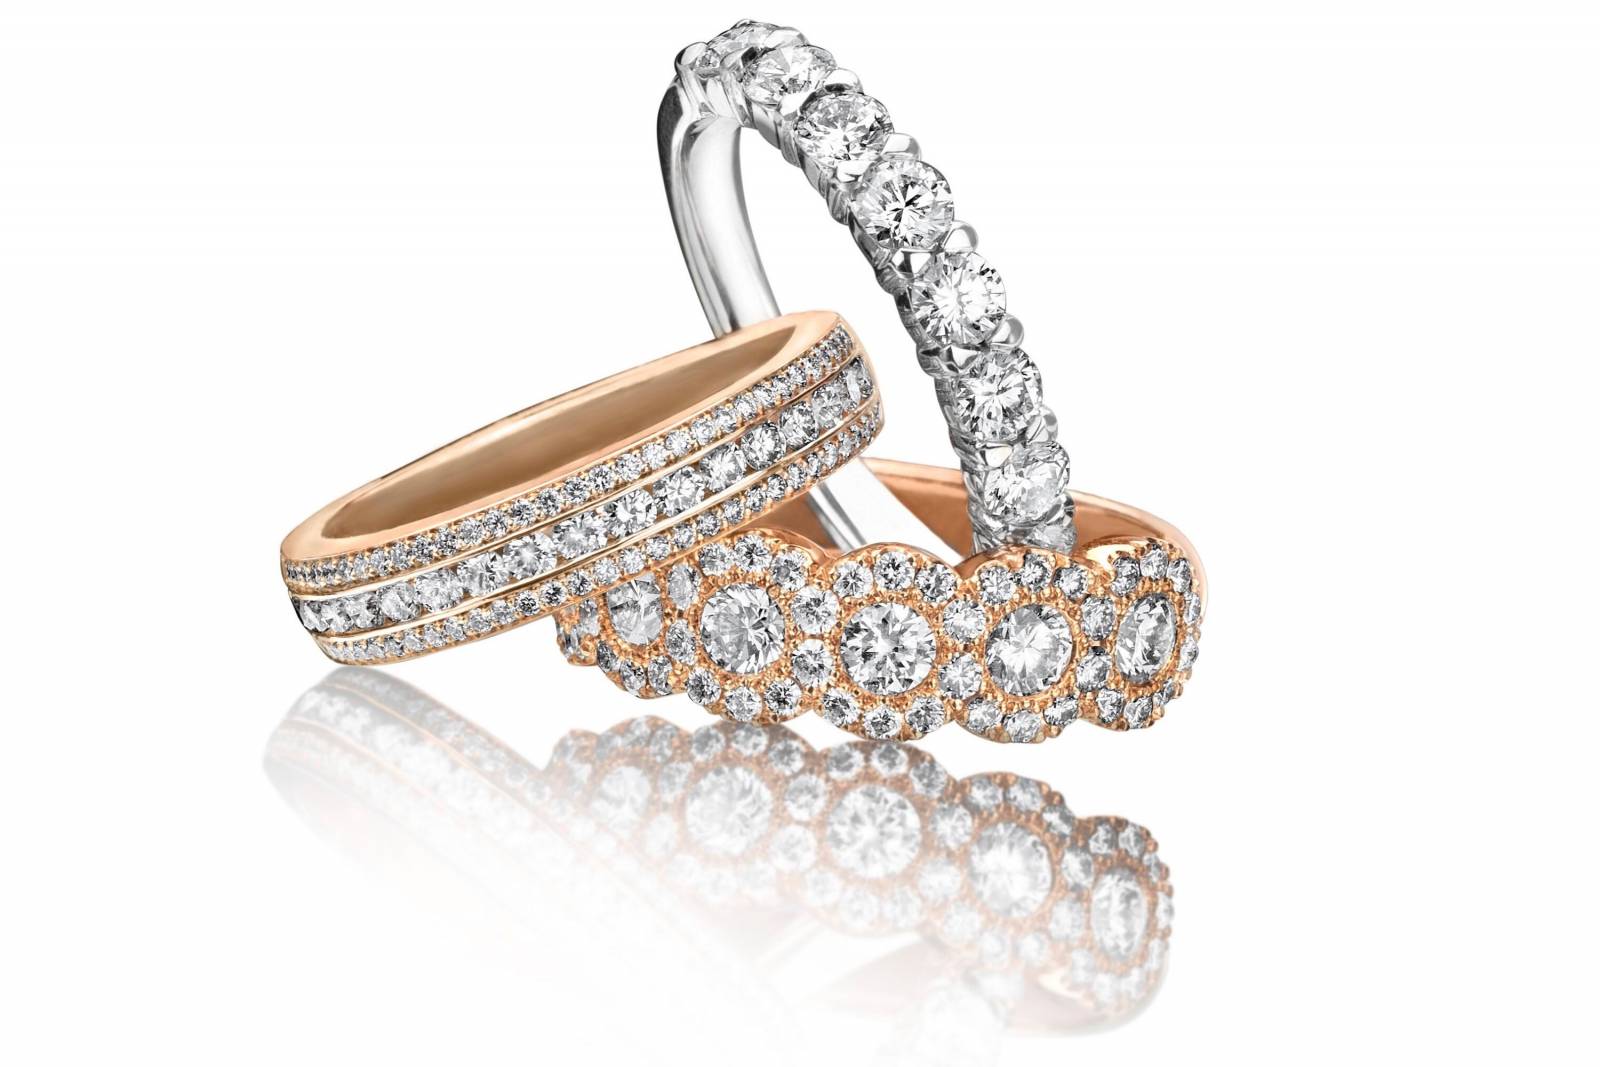 Juwelier Vandromme - Bruidsjuwelen - Juwelen - trouwring - verlovingsring - House of Weddings - 1